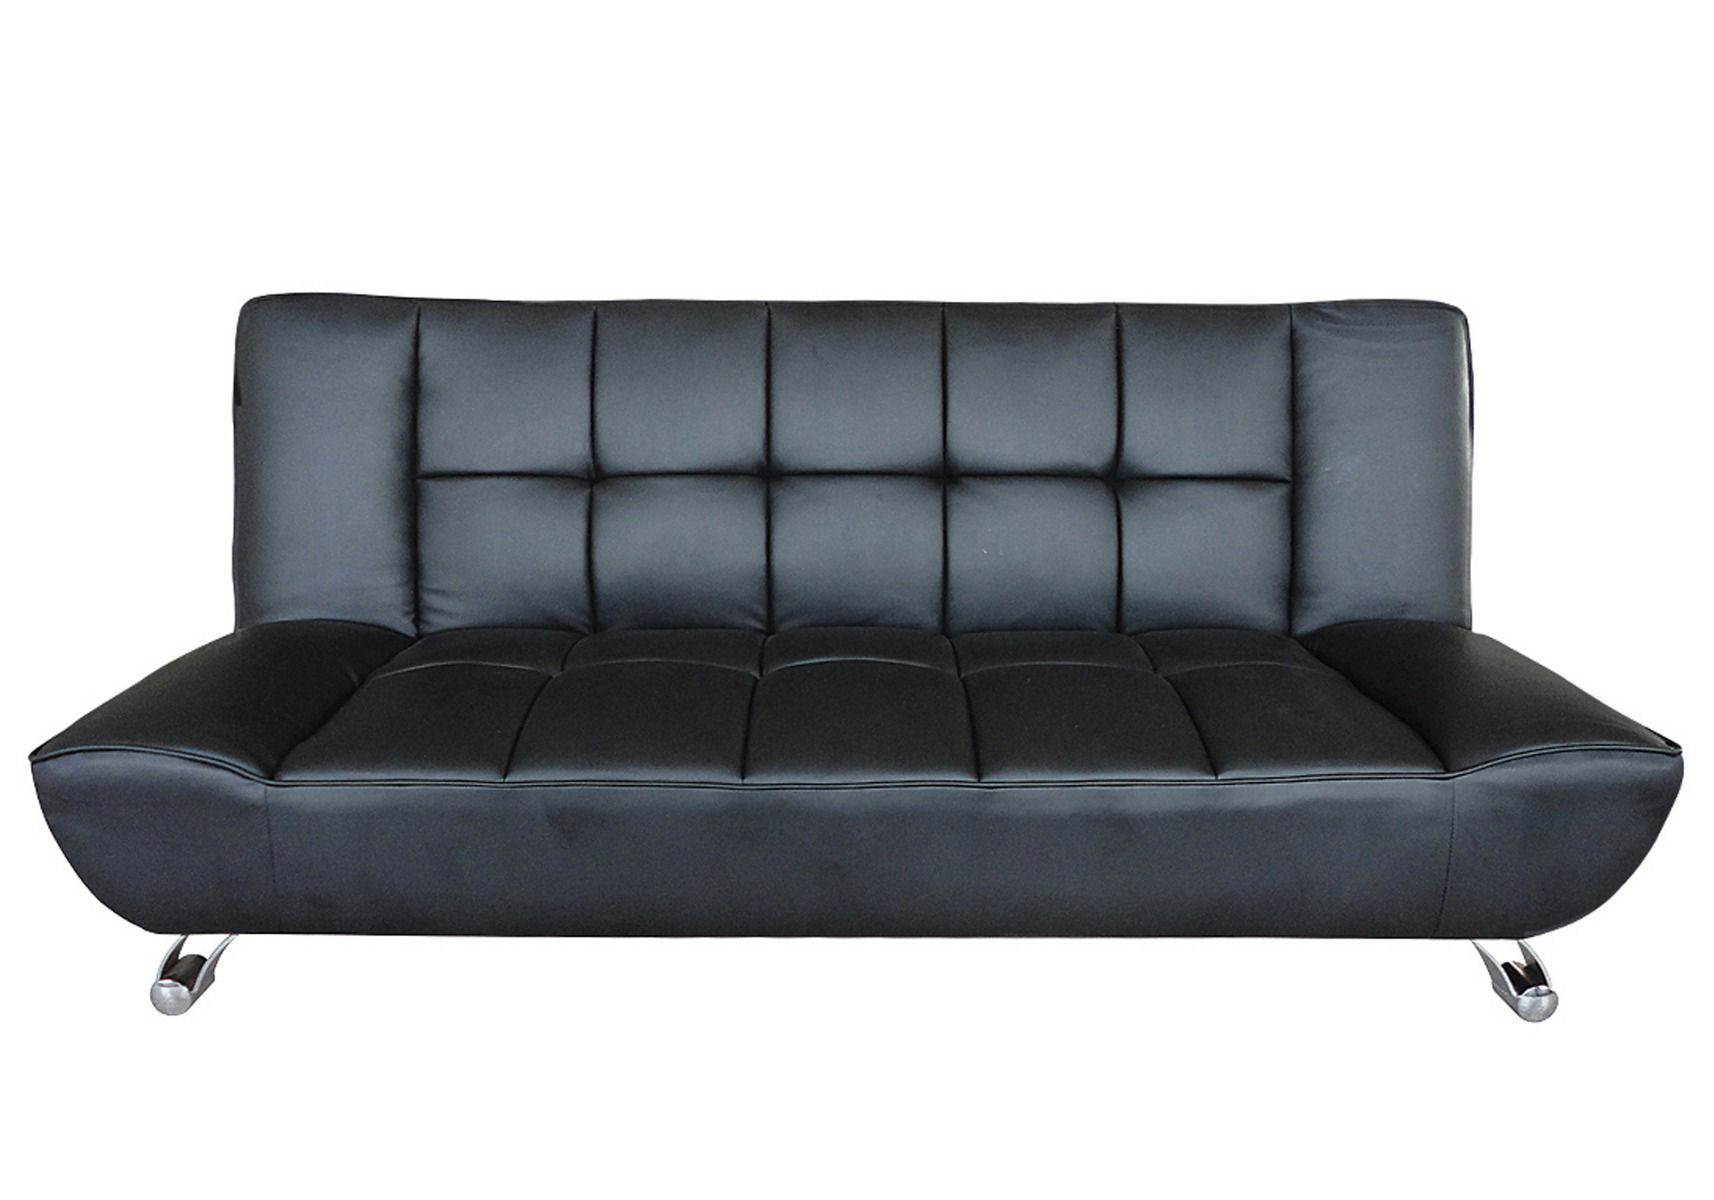 Vogue Black Faux Leather Sofa Bed, Leather Futon Beds